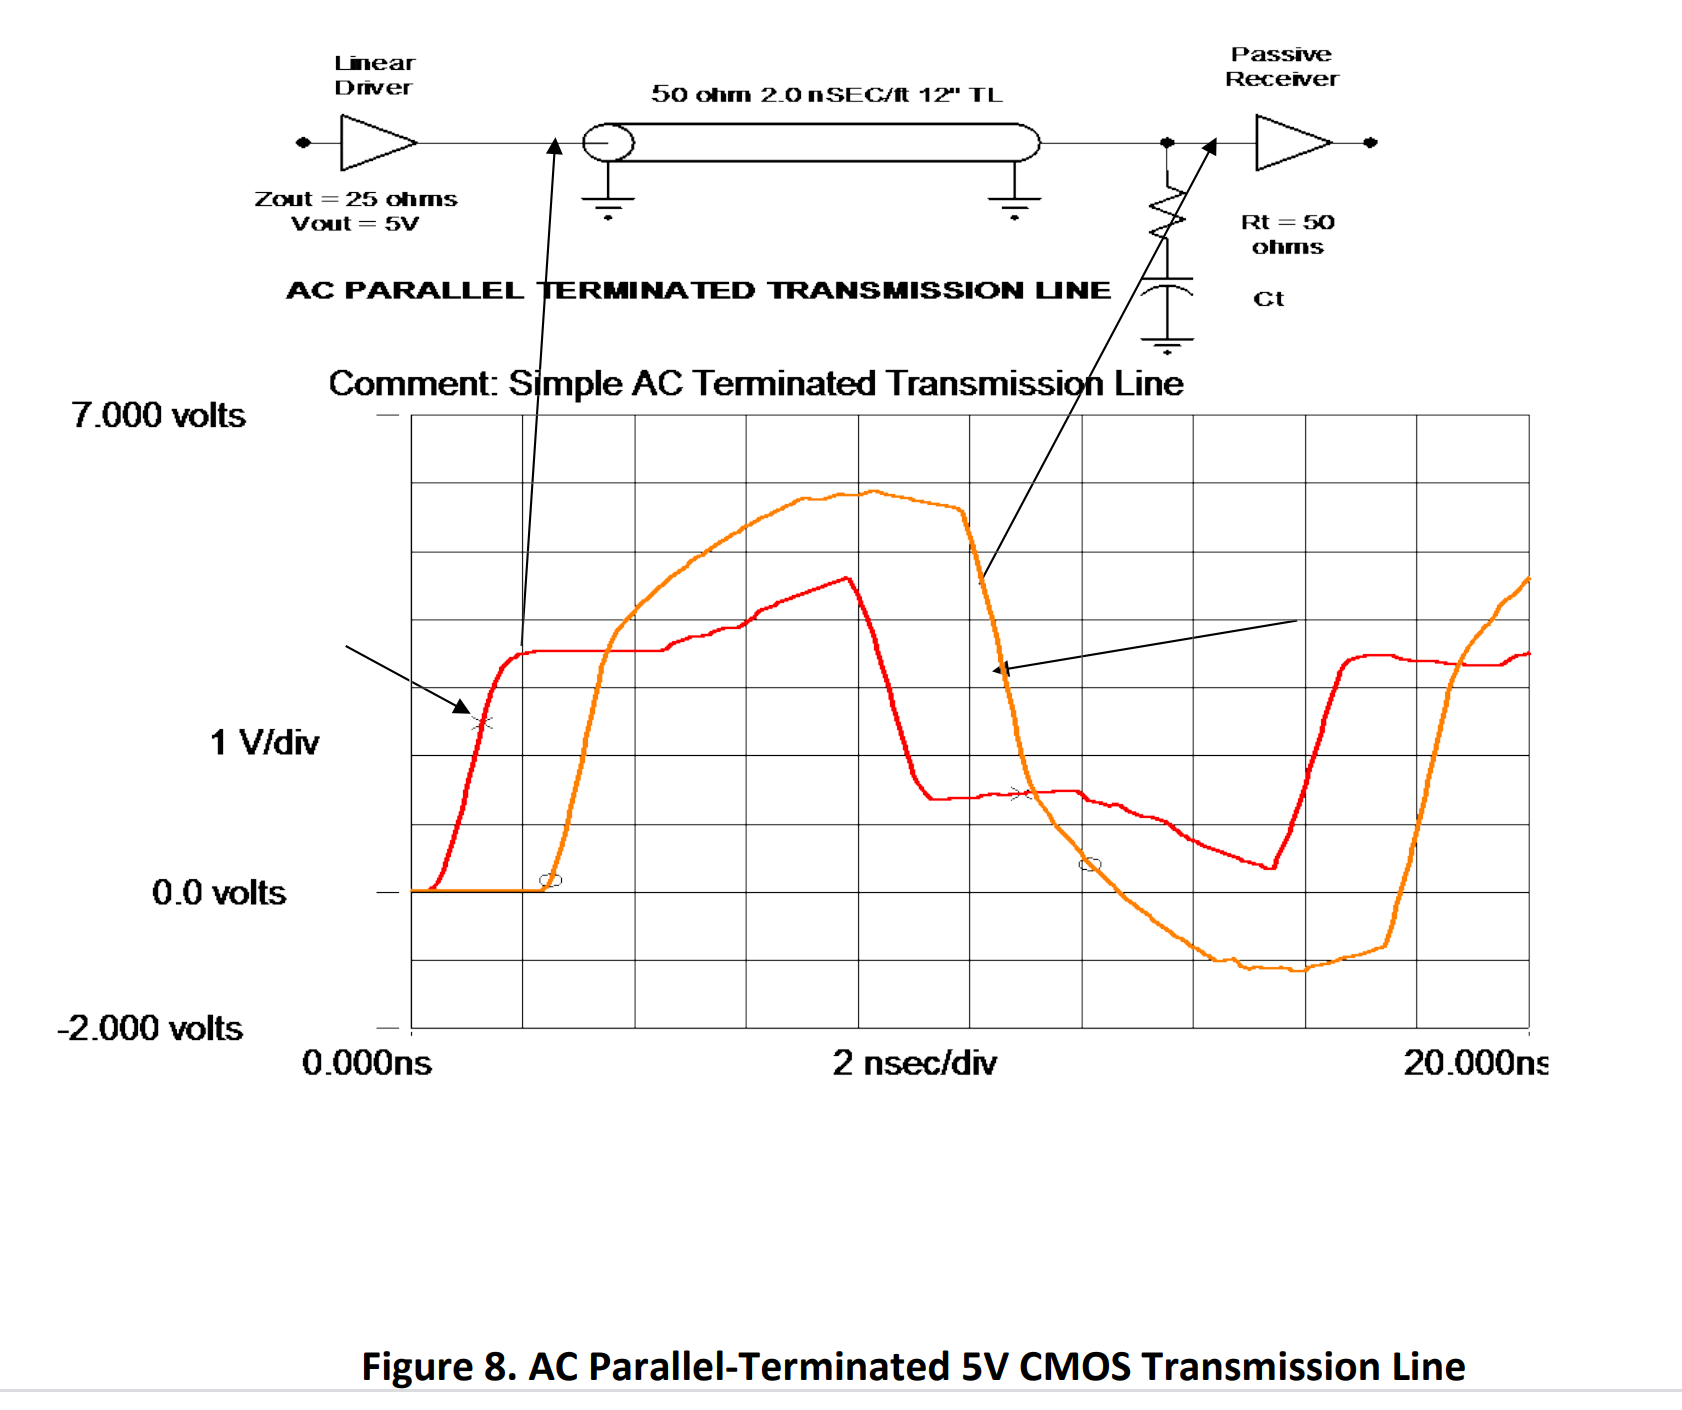 AC Parallel-Terminated 5V CMOS Transmission Line